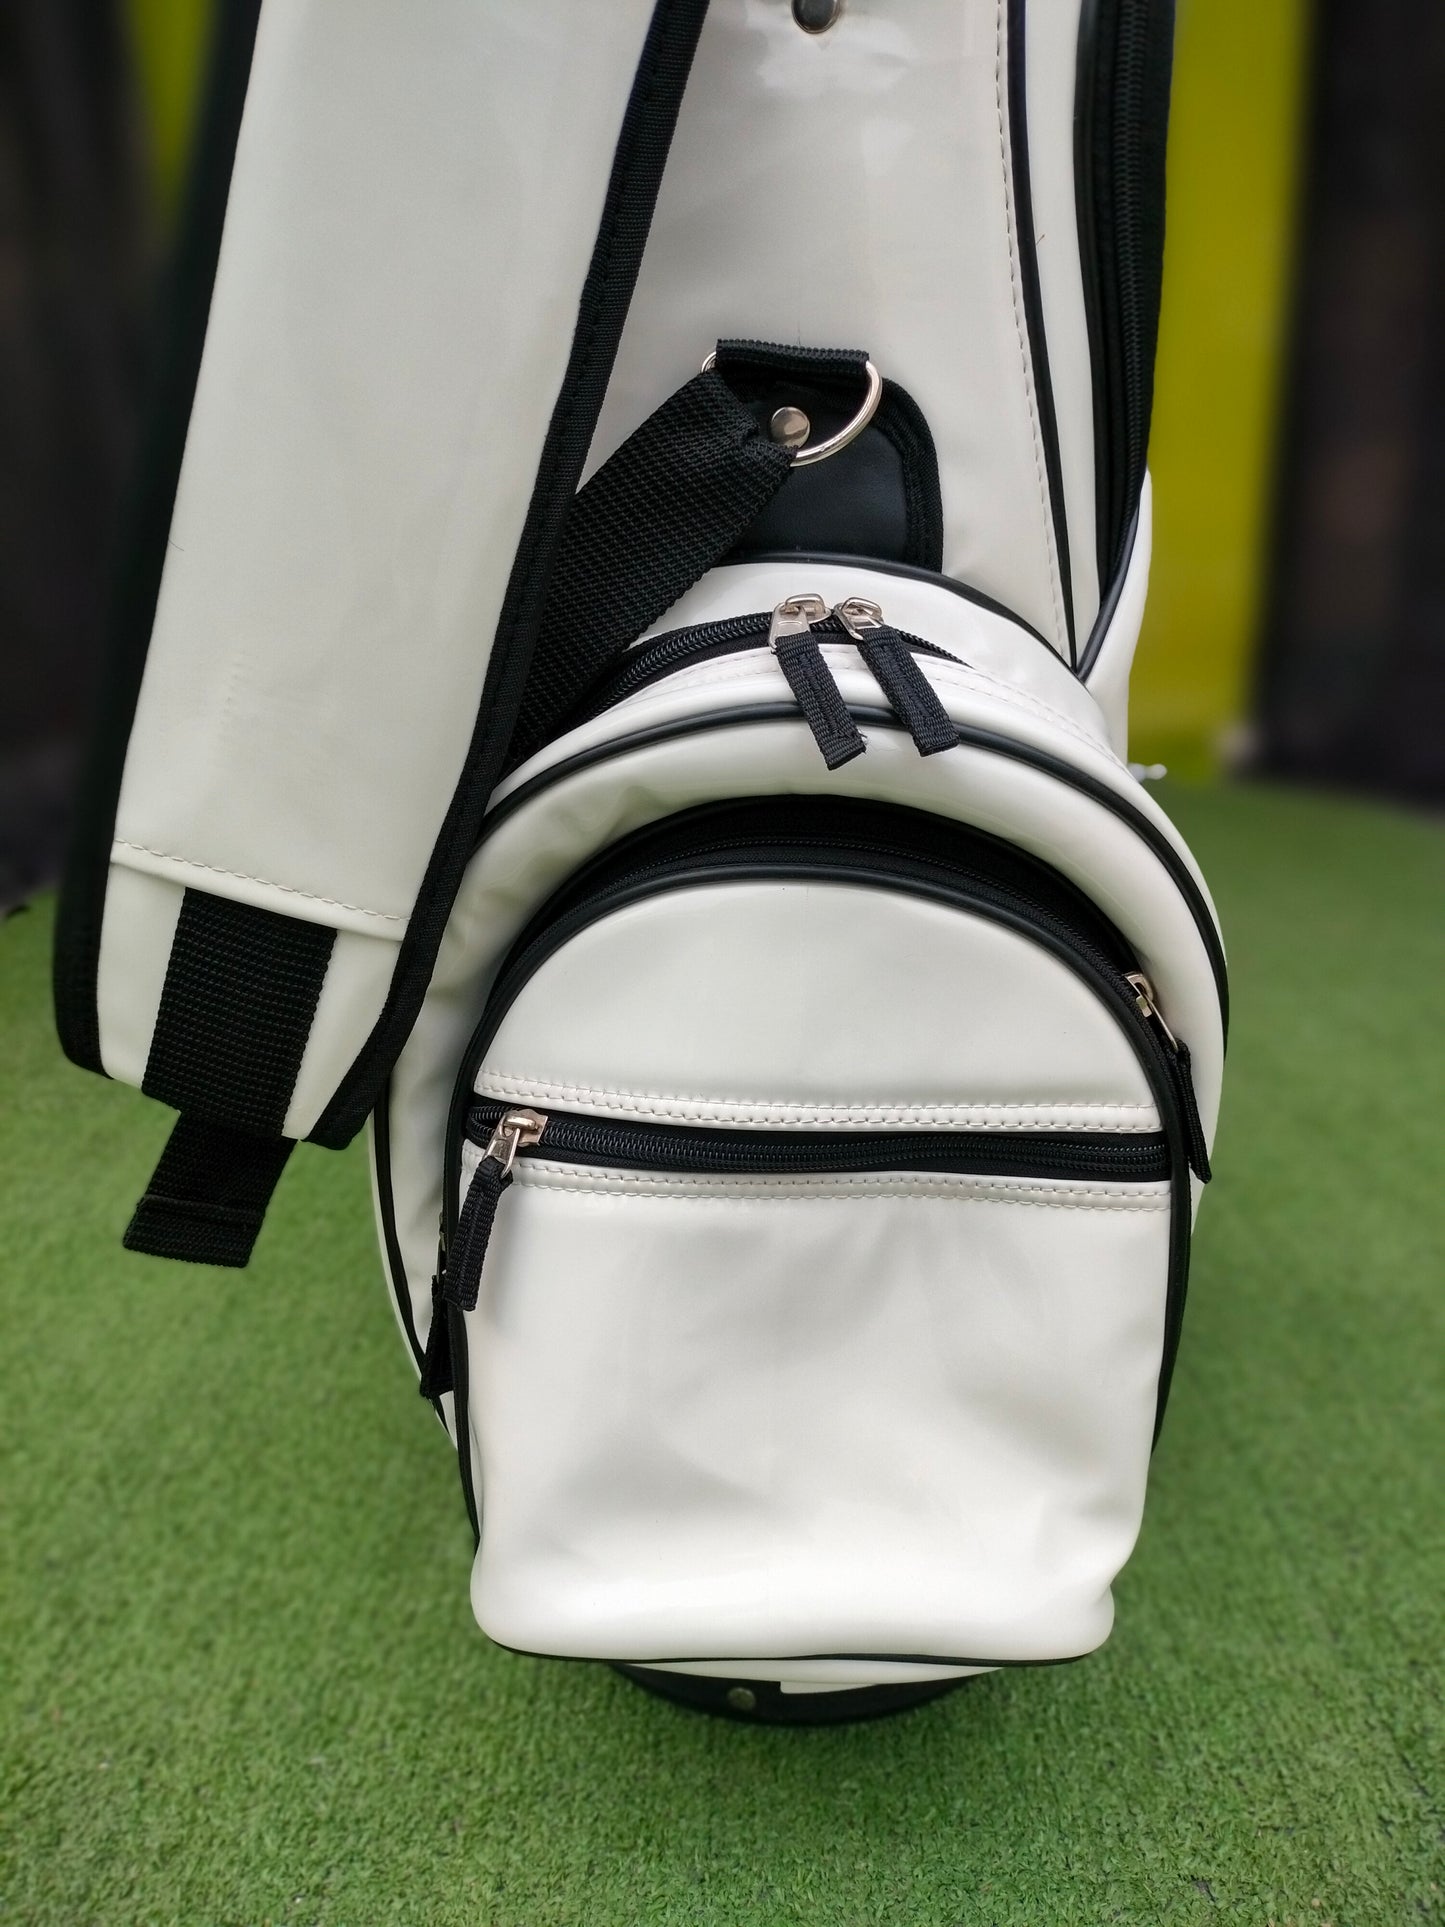 Old School Golf Bag - White